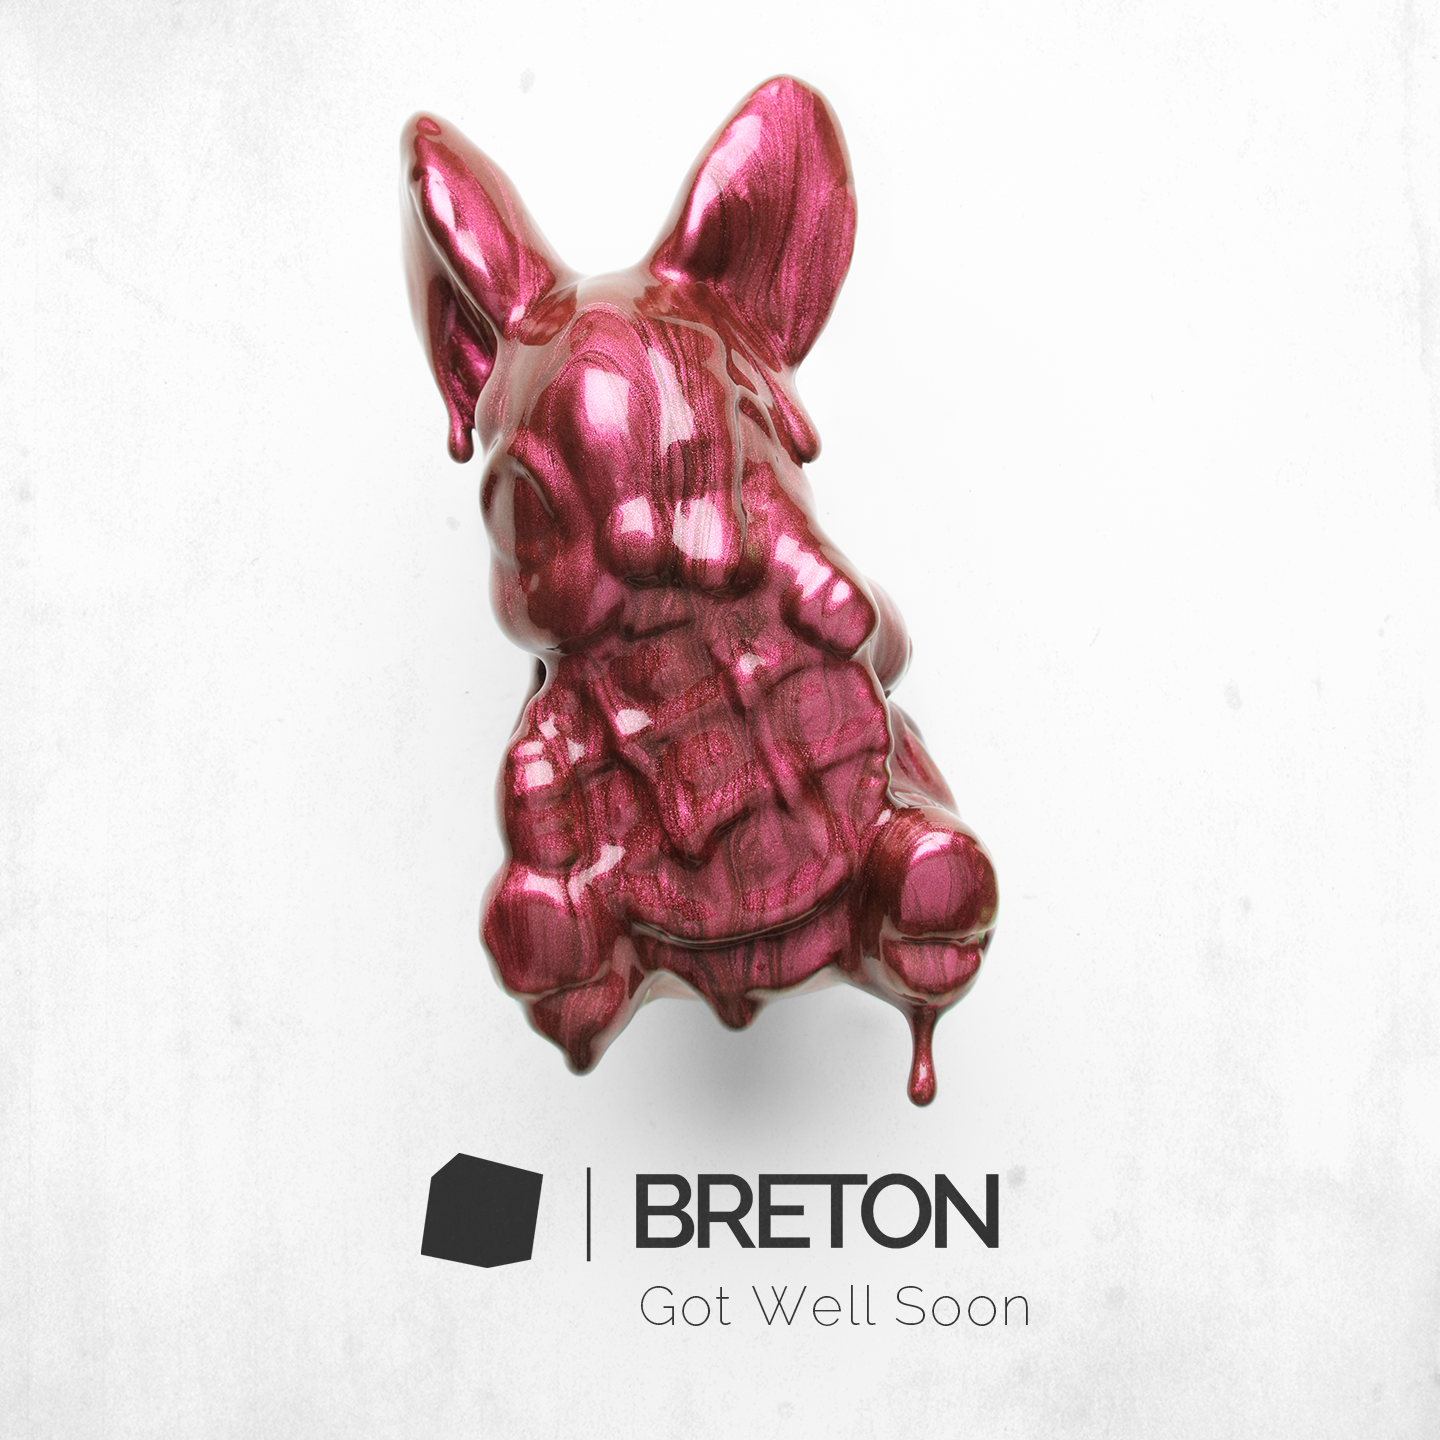 "Got Well Soon"- Album War Room Stories de Breton